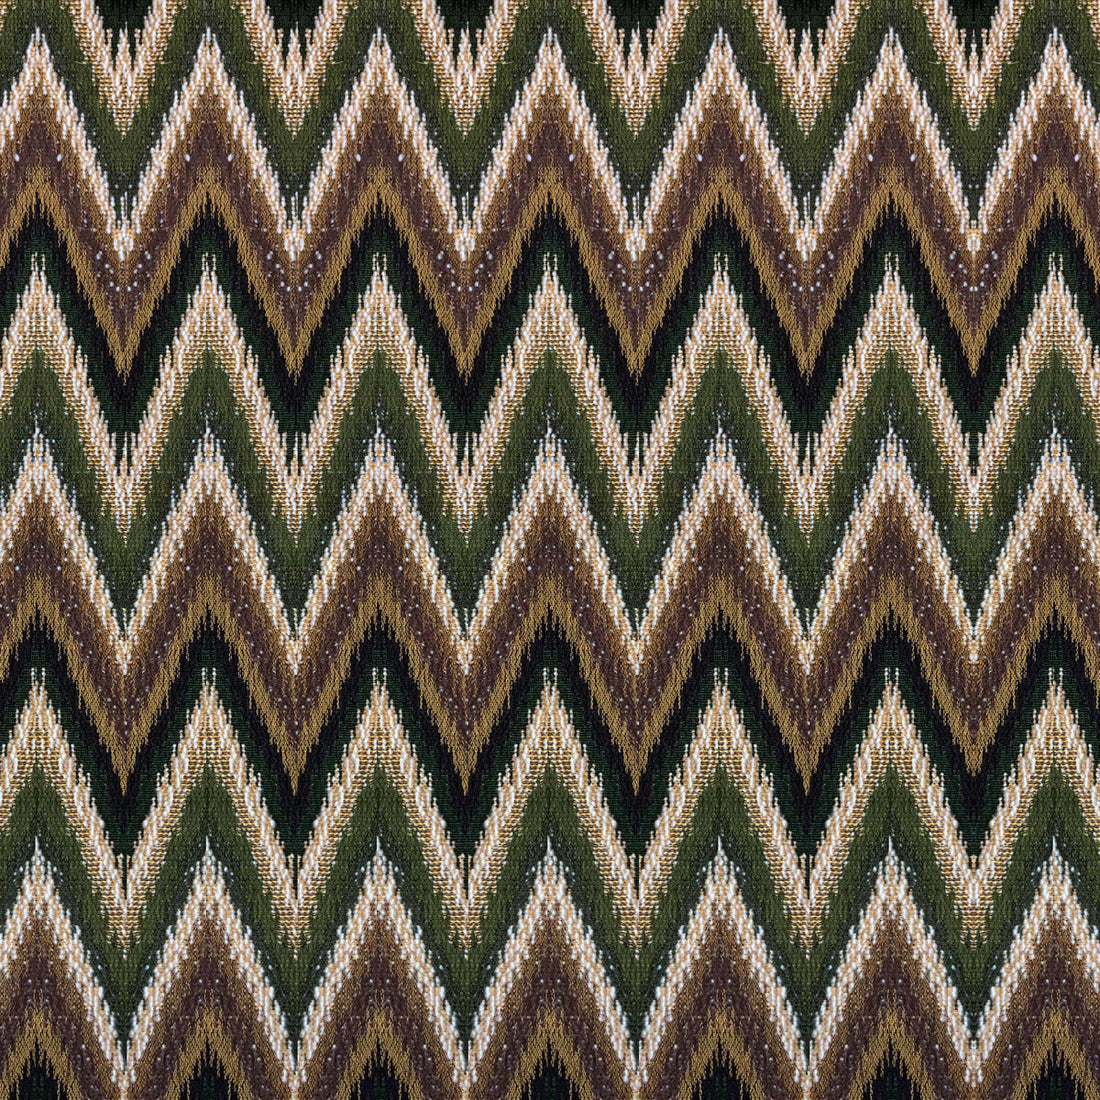 Alex fabric in verde color - pattern LCT1046.001.0 - by Gaston y Daniela in the Lorenzo Castillo VI collection